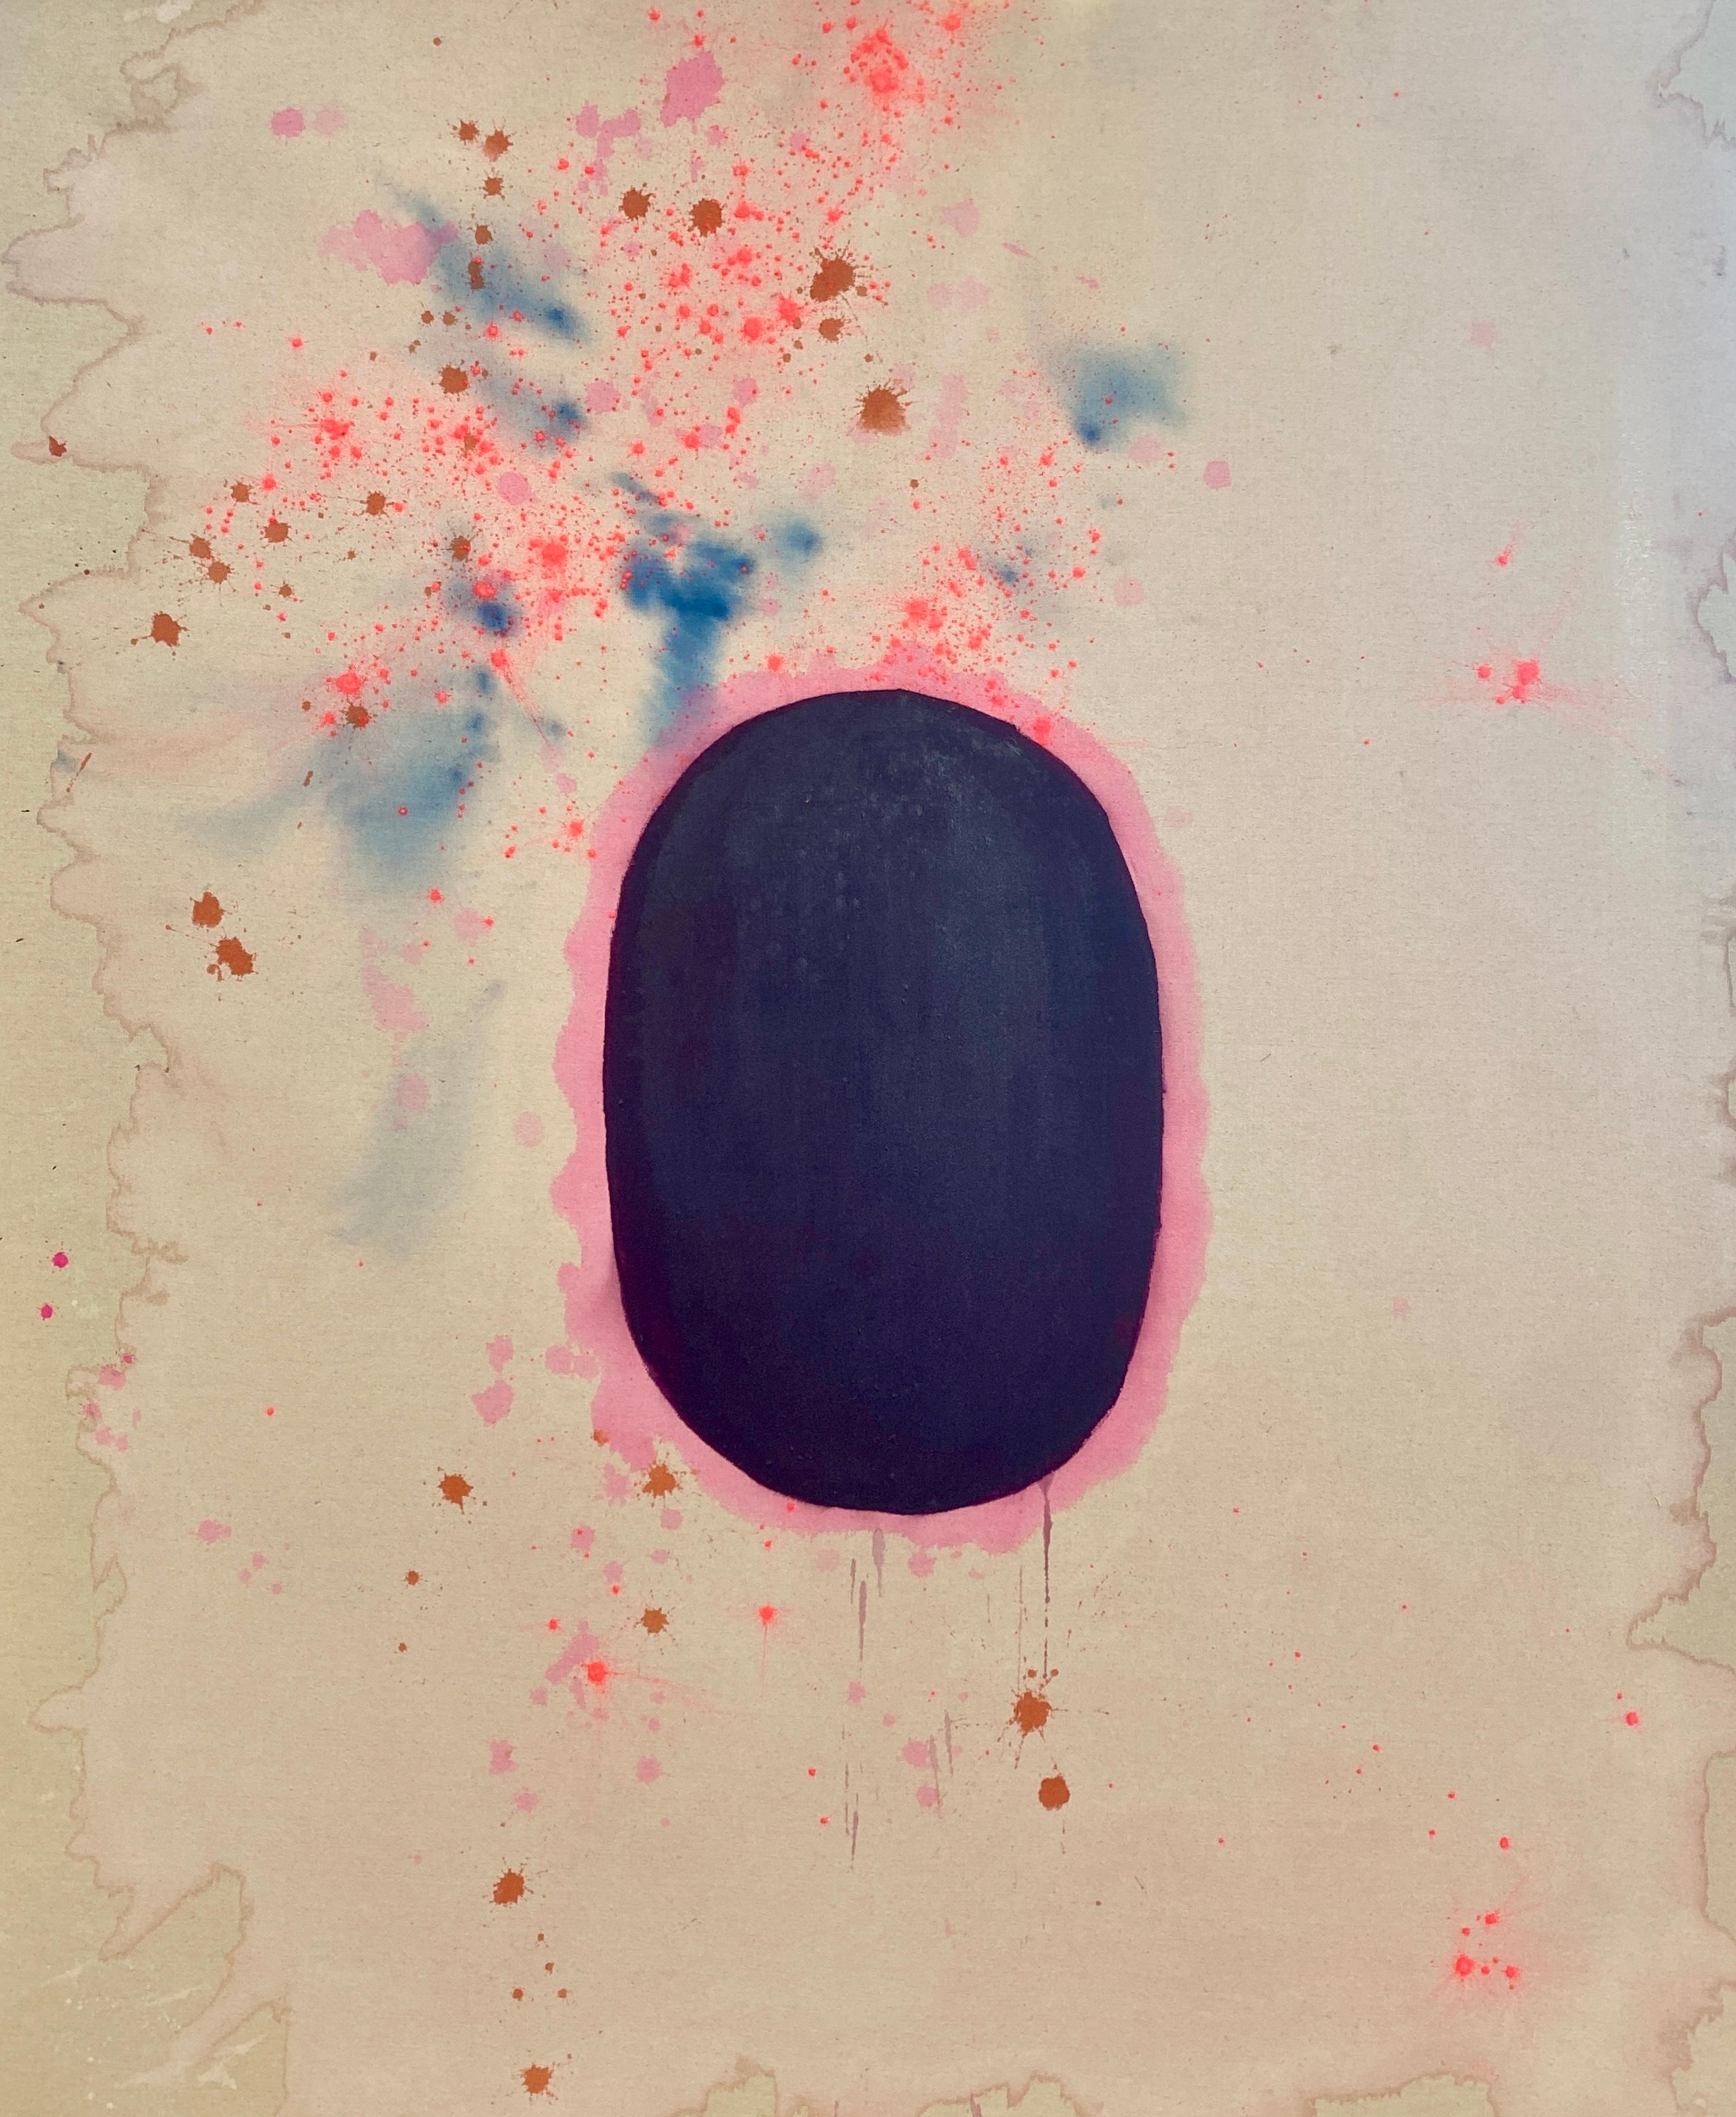 Elisa Niva Abstract Painting - Holi powder Tantra painting #2 - Colorful abstract tantric stain painting